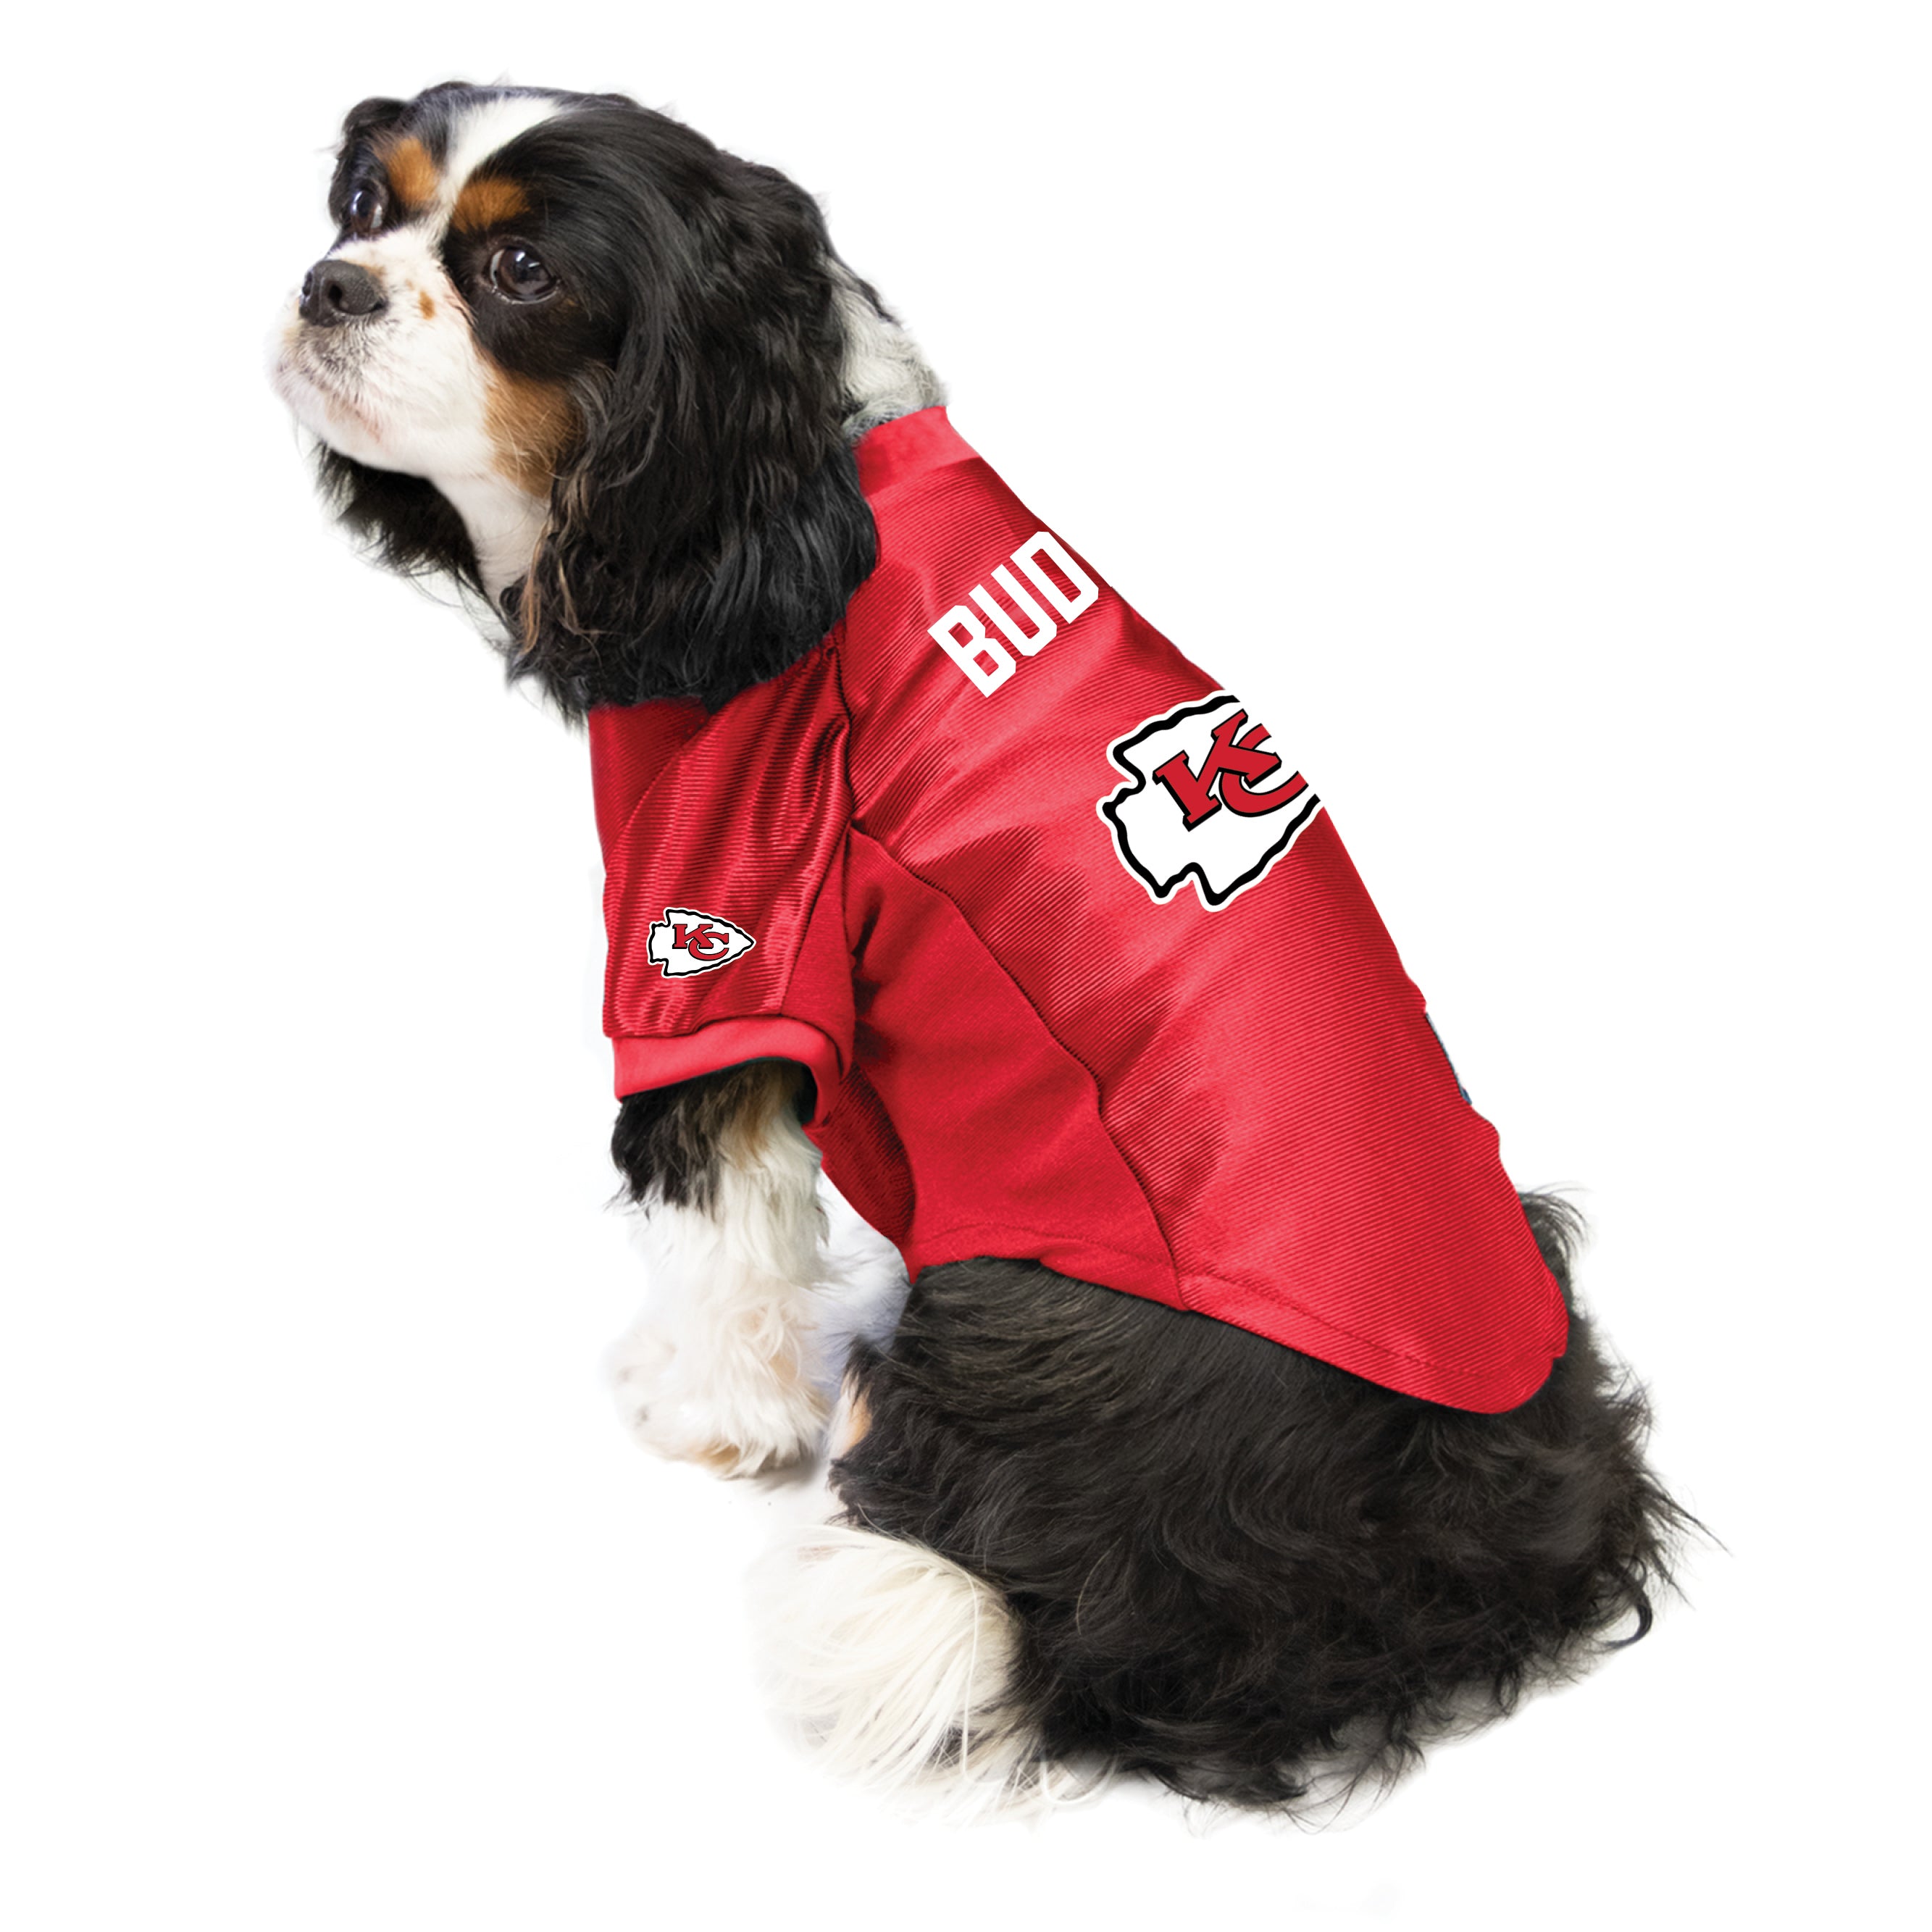 Doggie chiefs jersey(